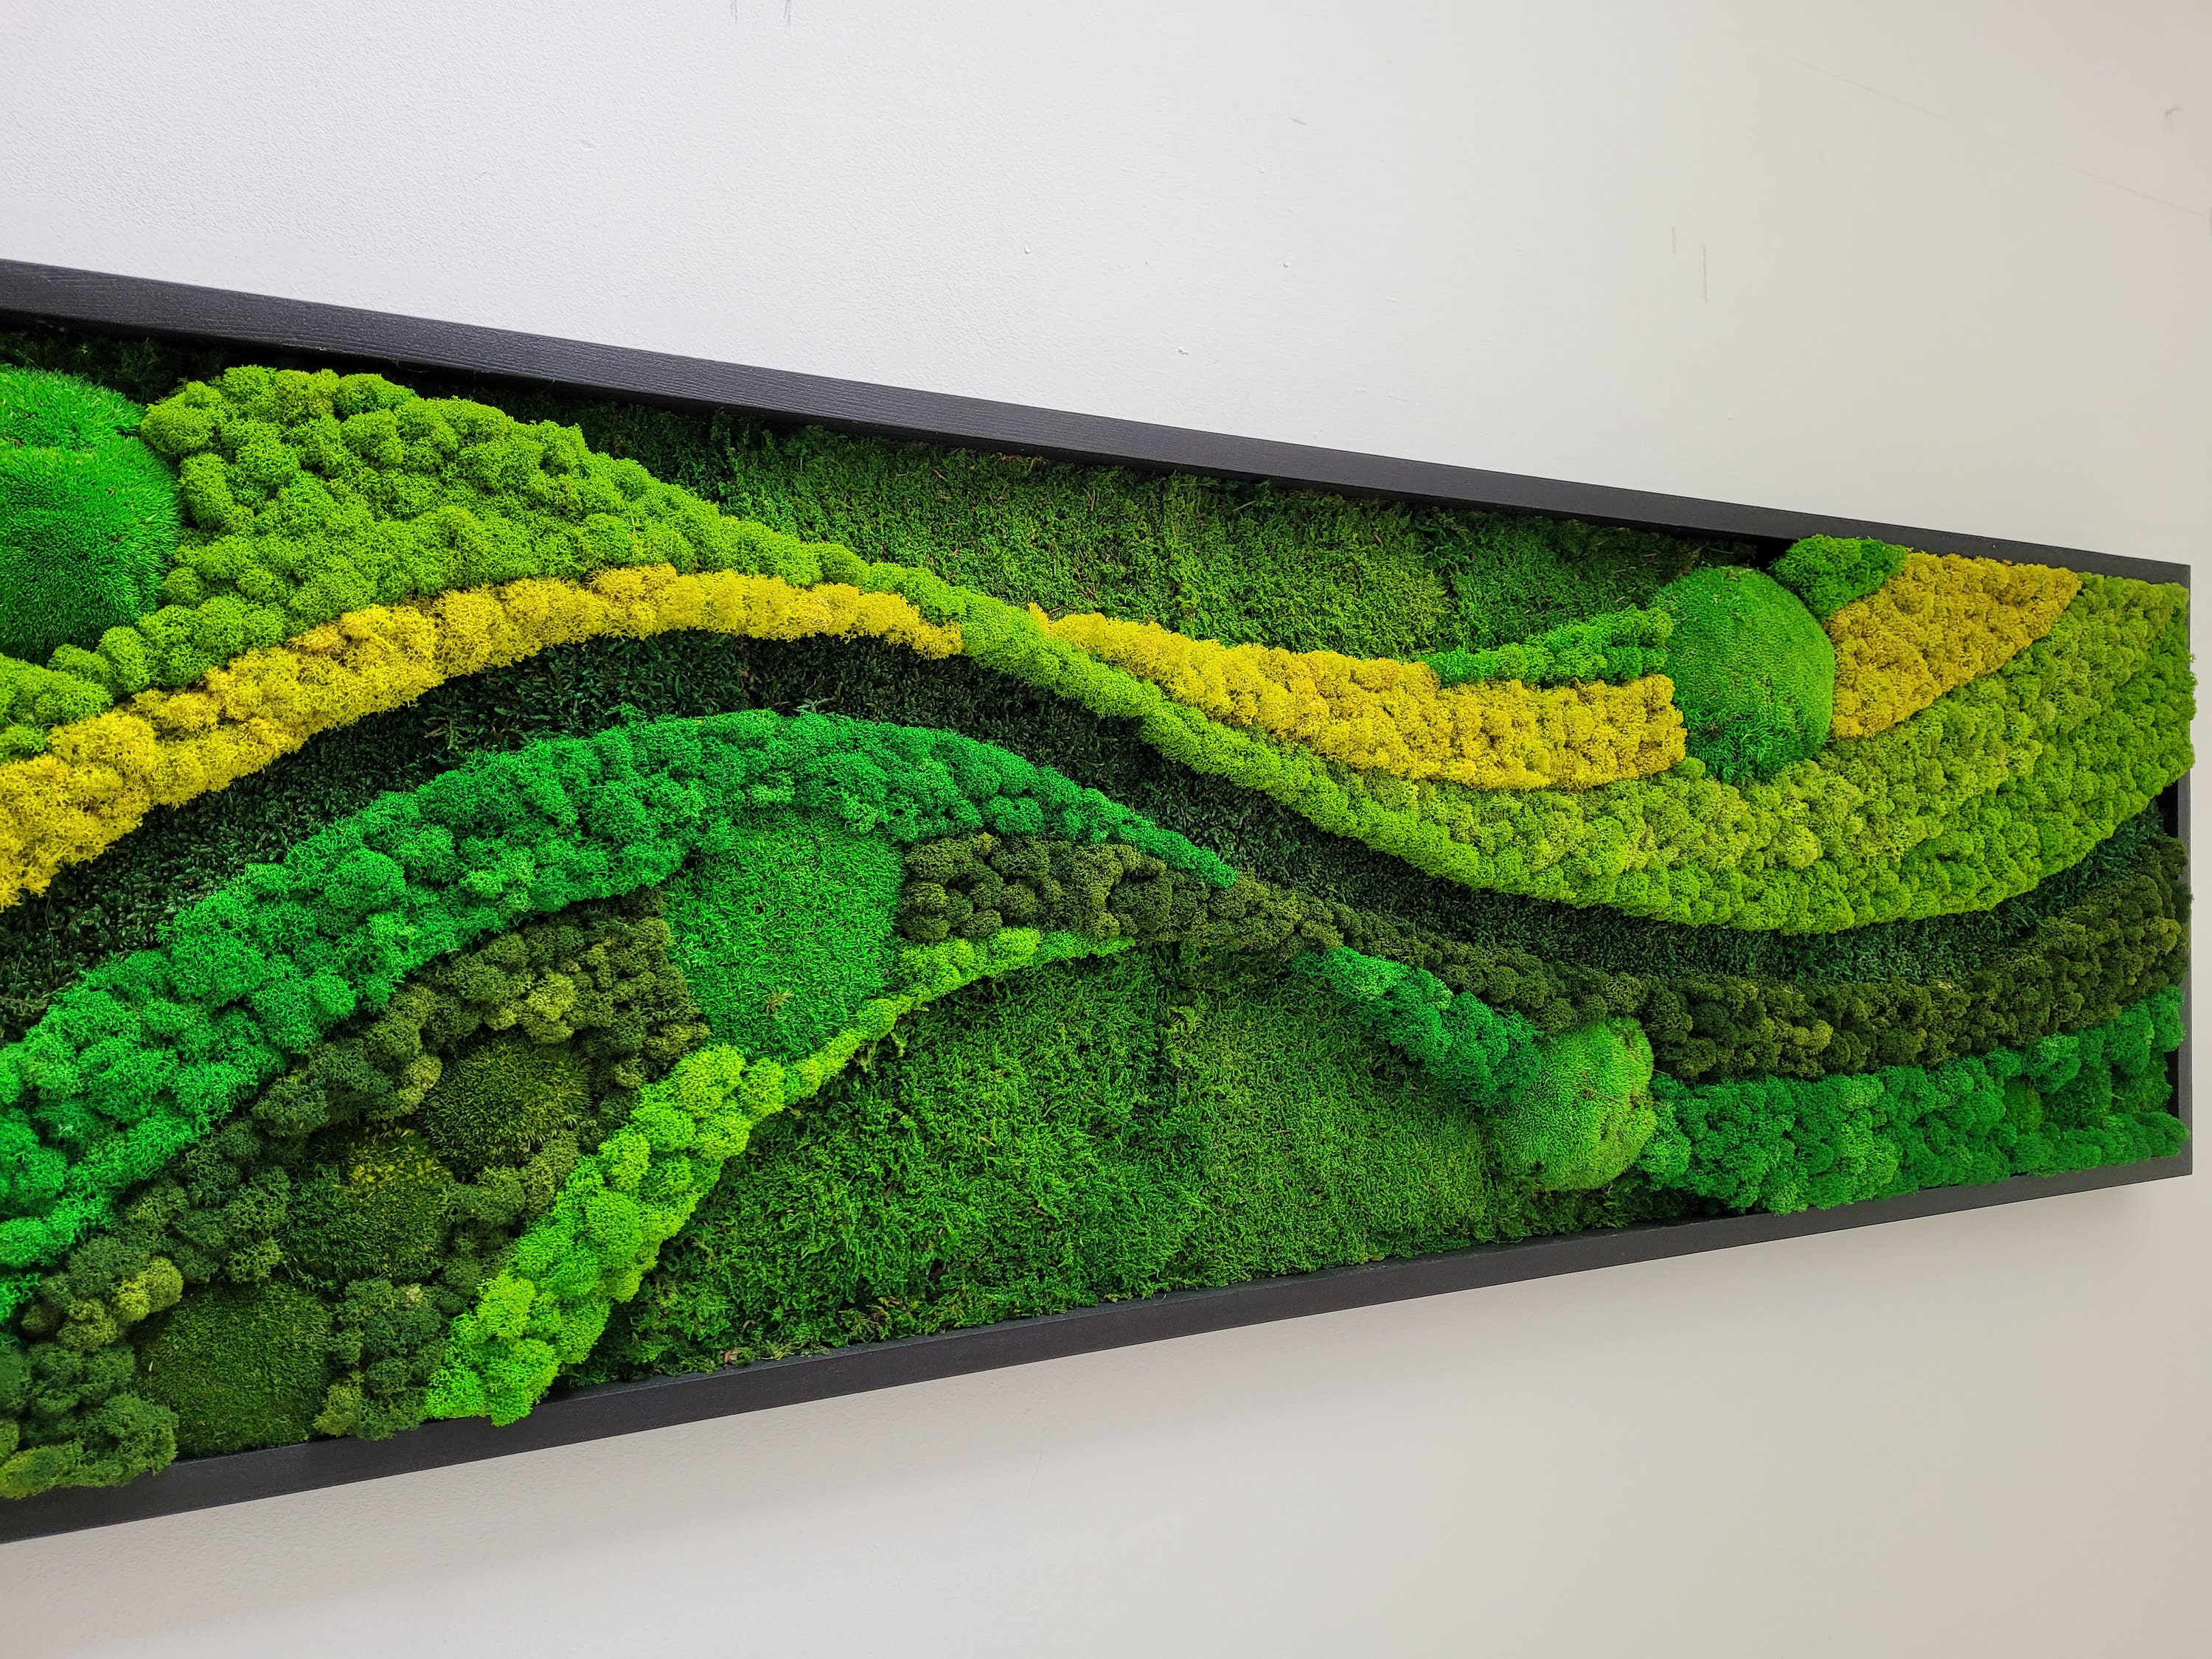 Moss Wall Art, Sustainable Living Wall Decor, 10x10